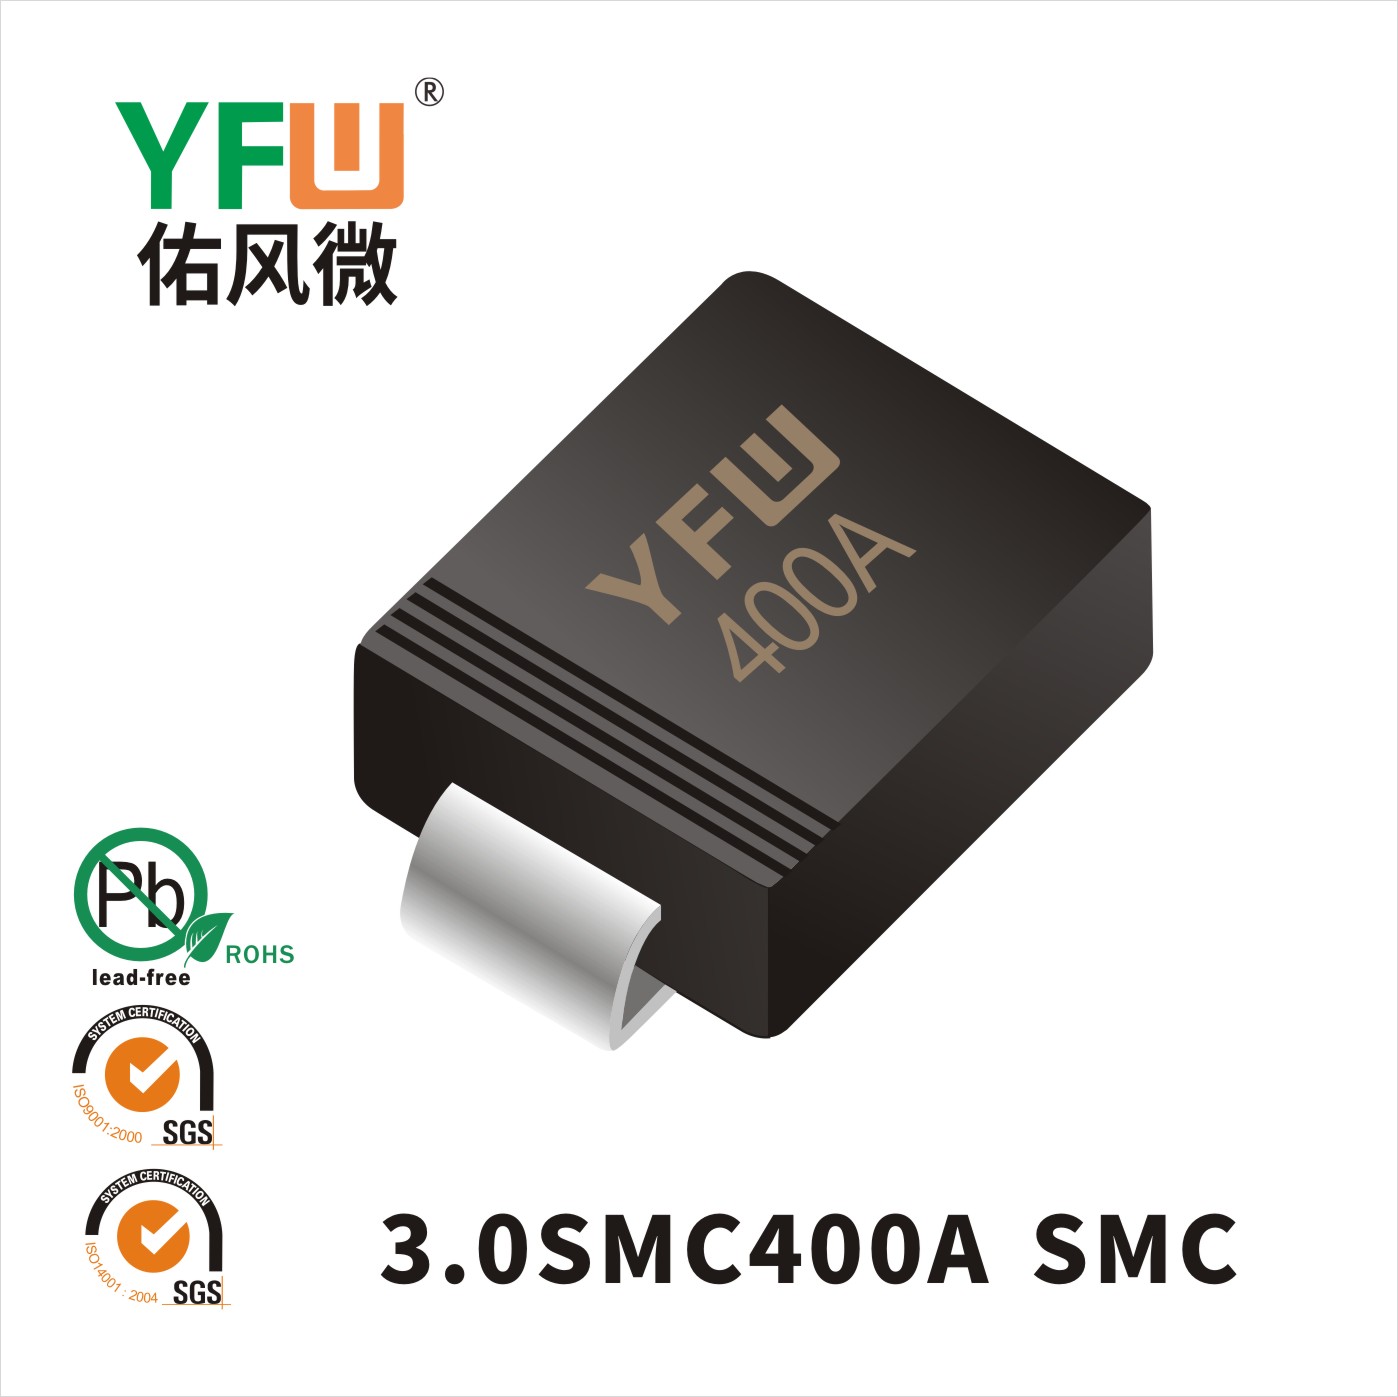 3.0SMC400A SMC(DO-214AB)_Marking:400A _Transient Voltage Suppressor Diode_YFW brand